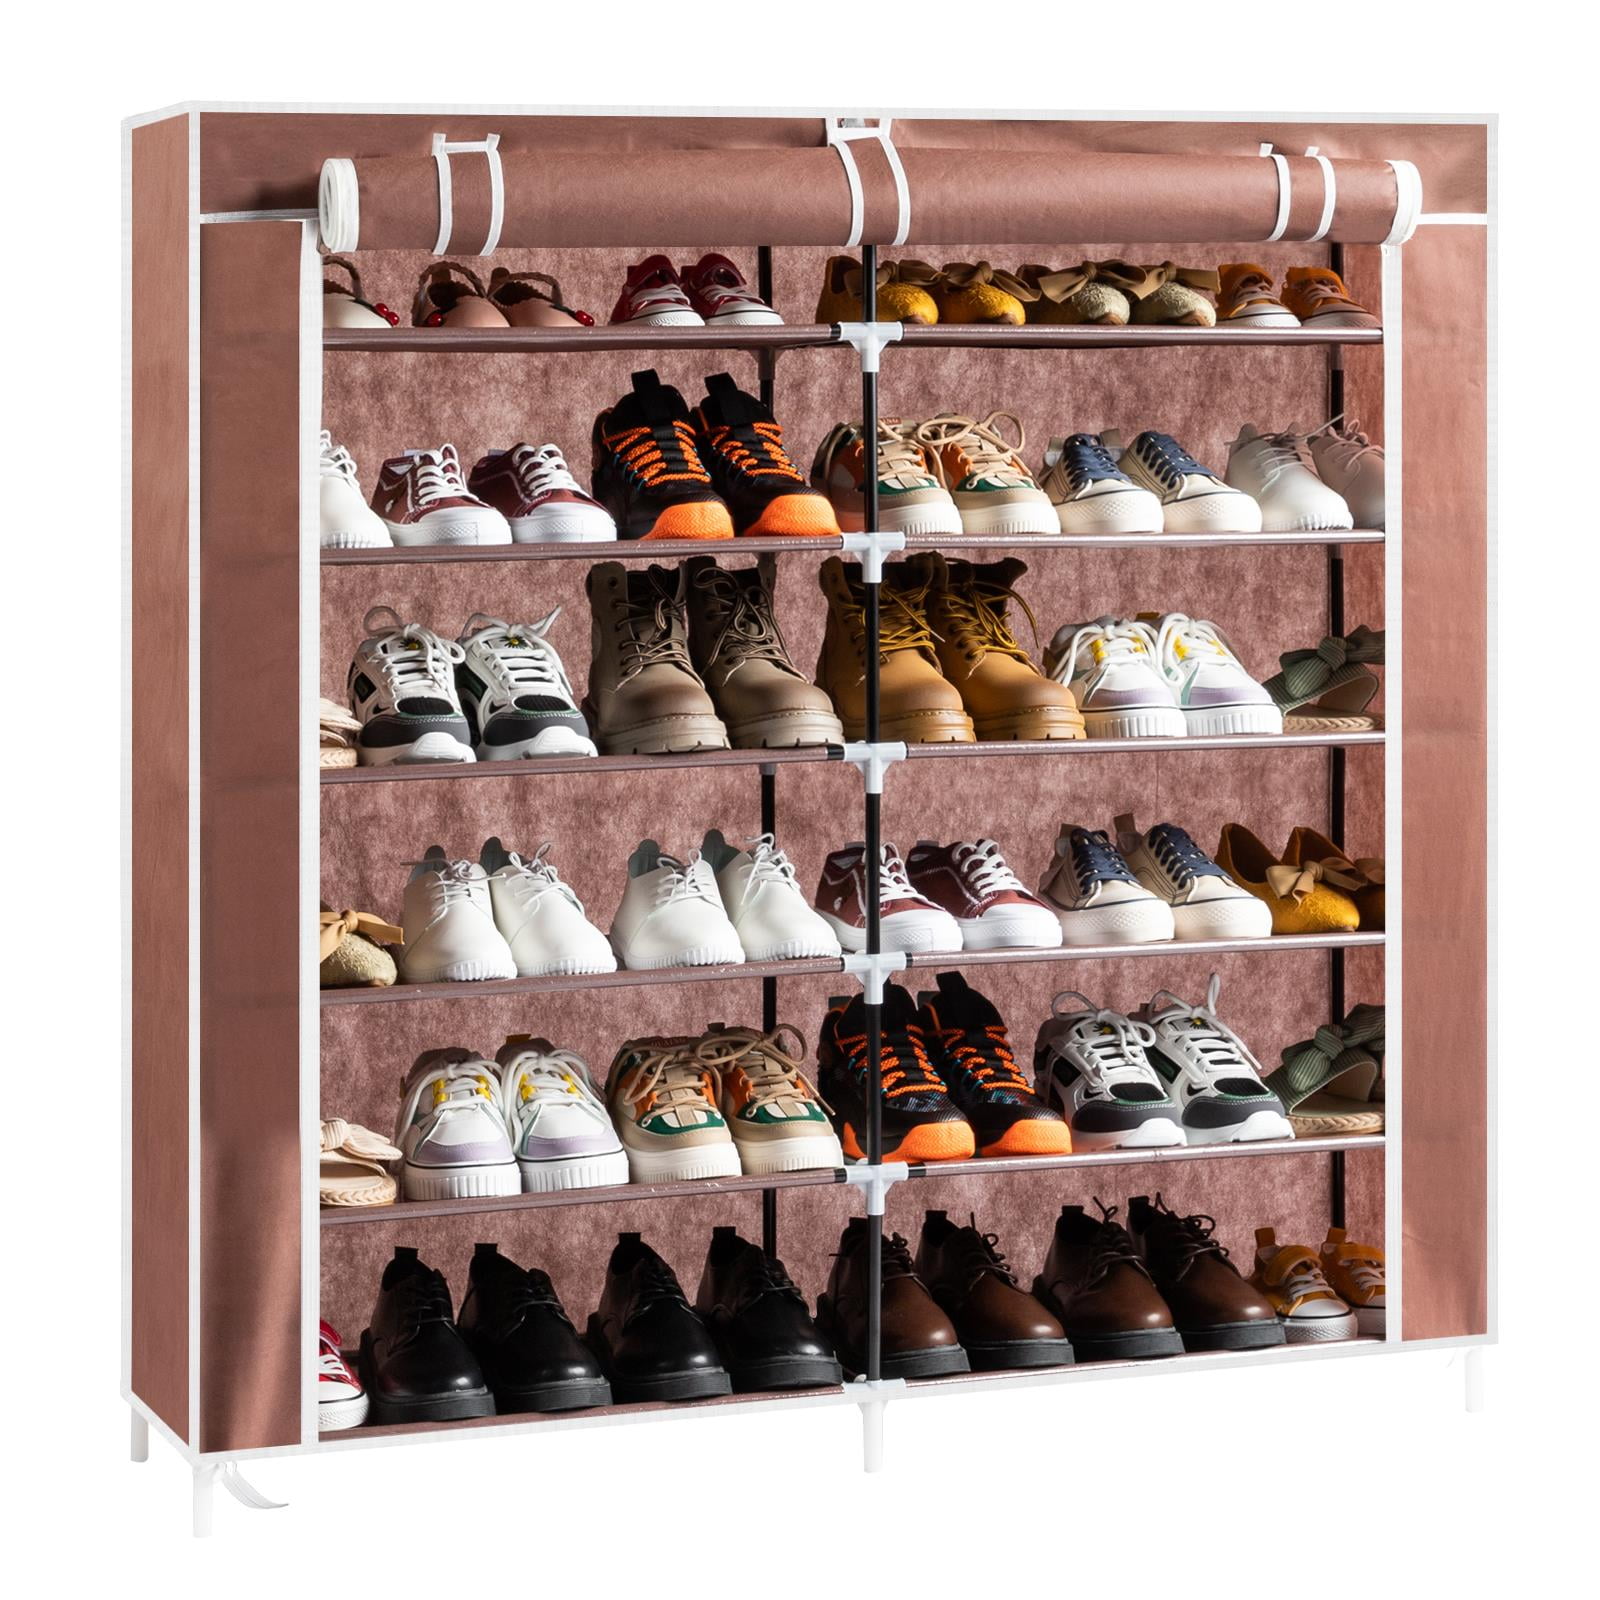 36 Inches Rustic Shoe Rack 3 Levels, Shoe Storage, Shoe Organizer